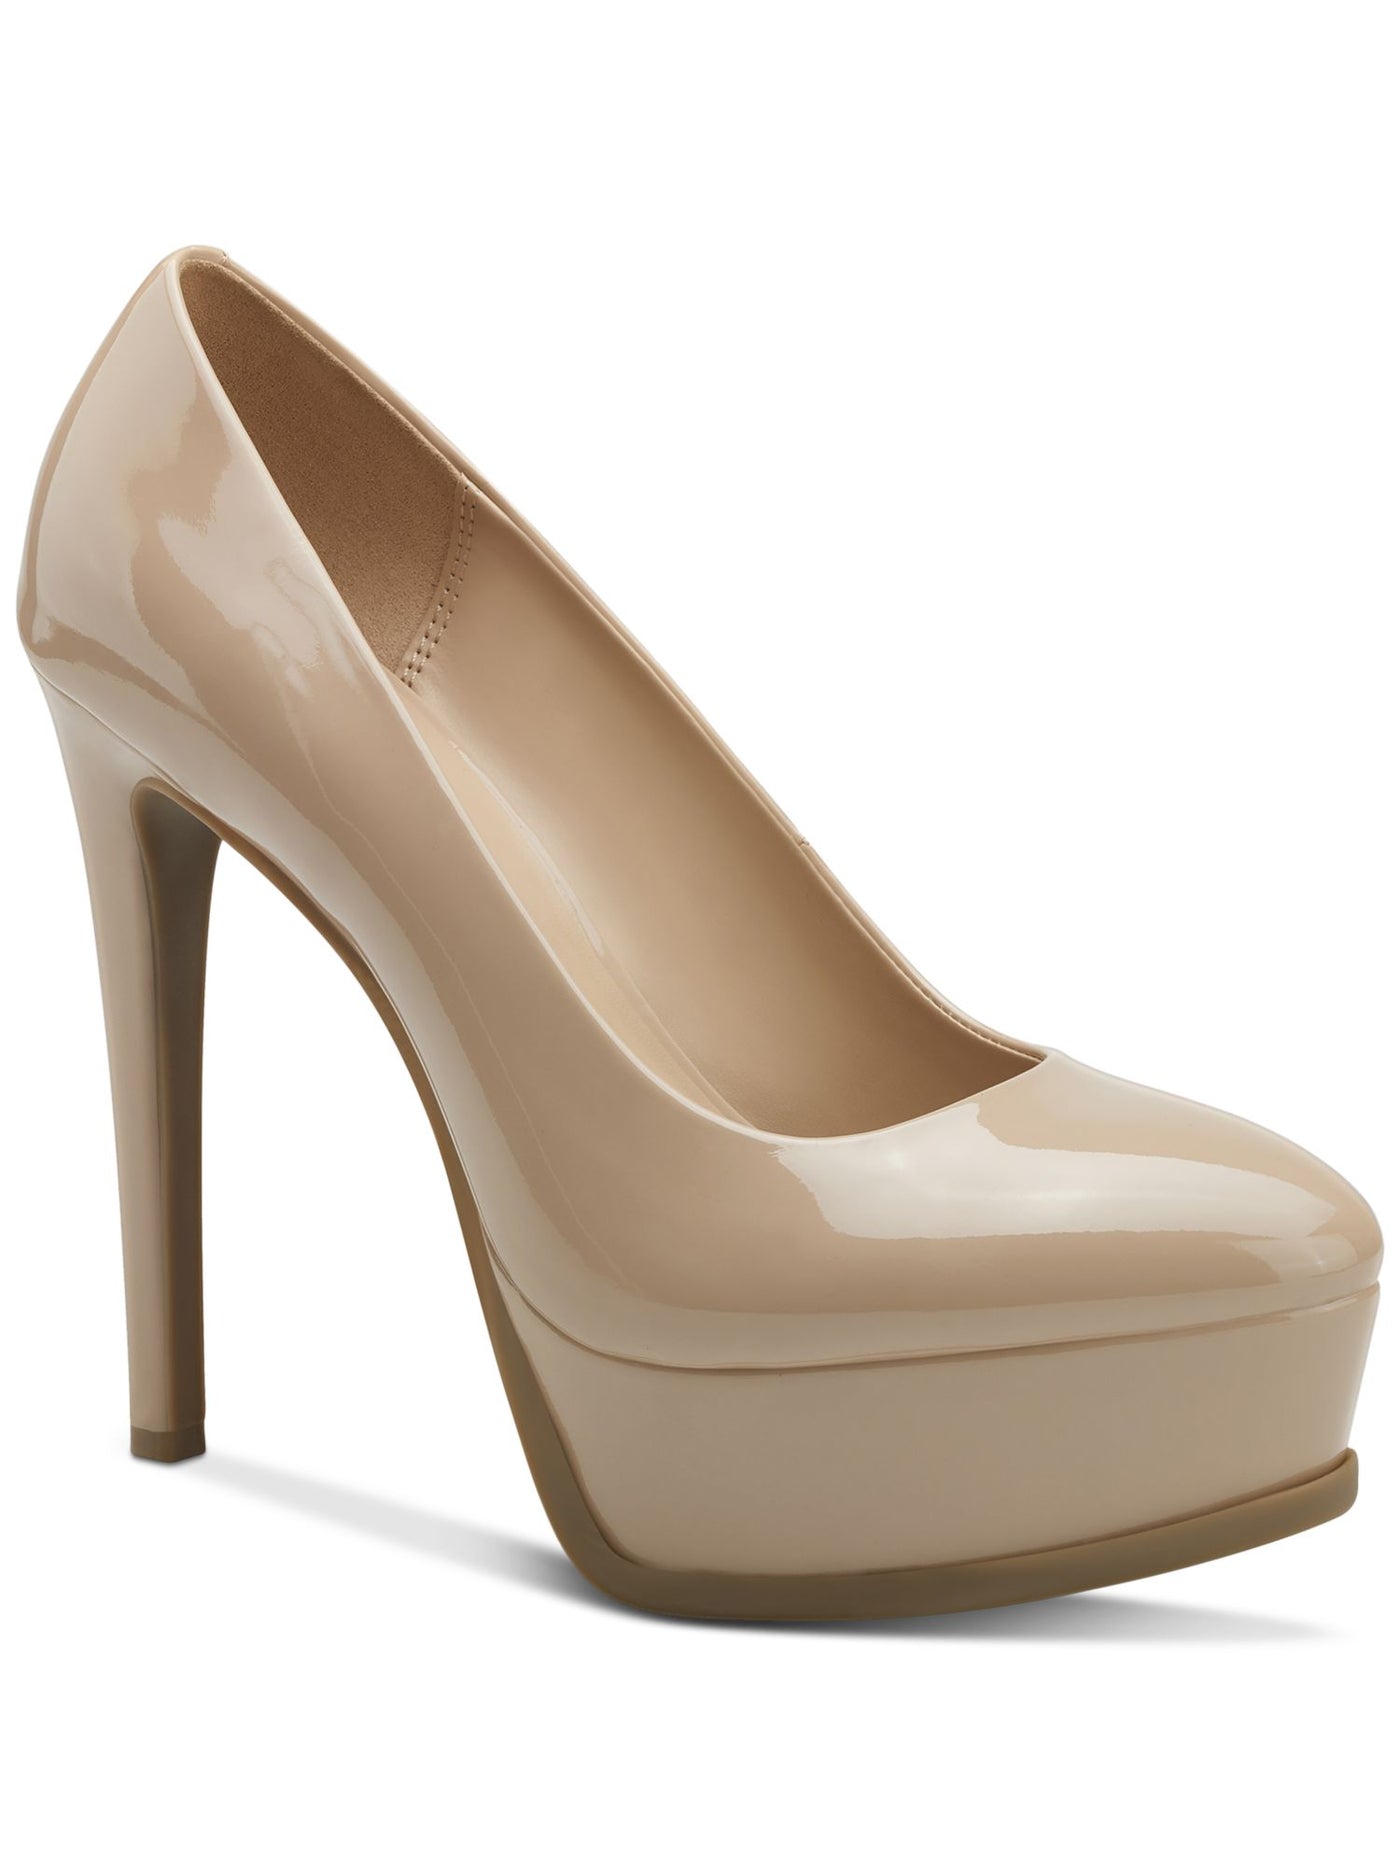 THALIA SODI Womens Beige 1-1/2" Platform Padded Stasia Almond Toe Stiletto Slip On Dress Pumps Shoes 8.5 M